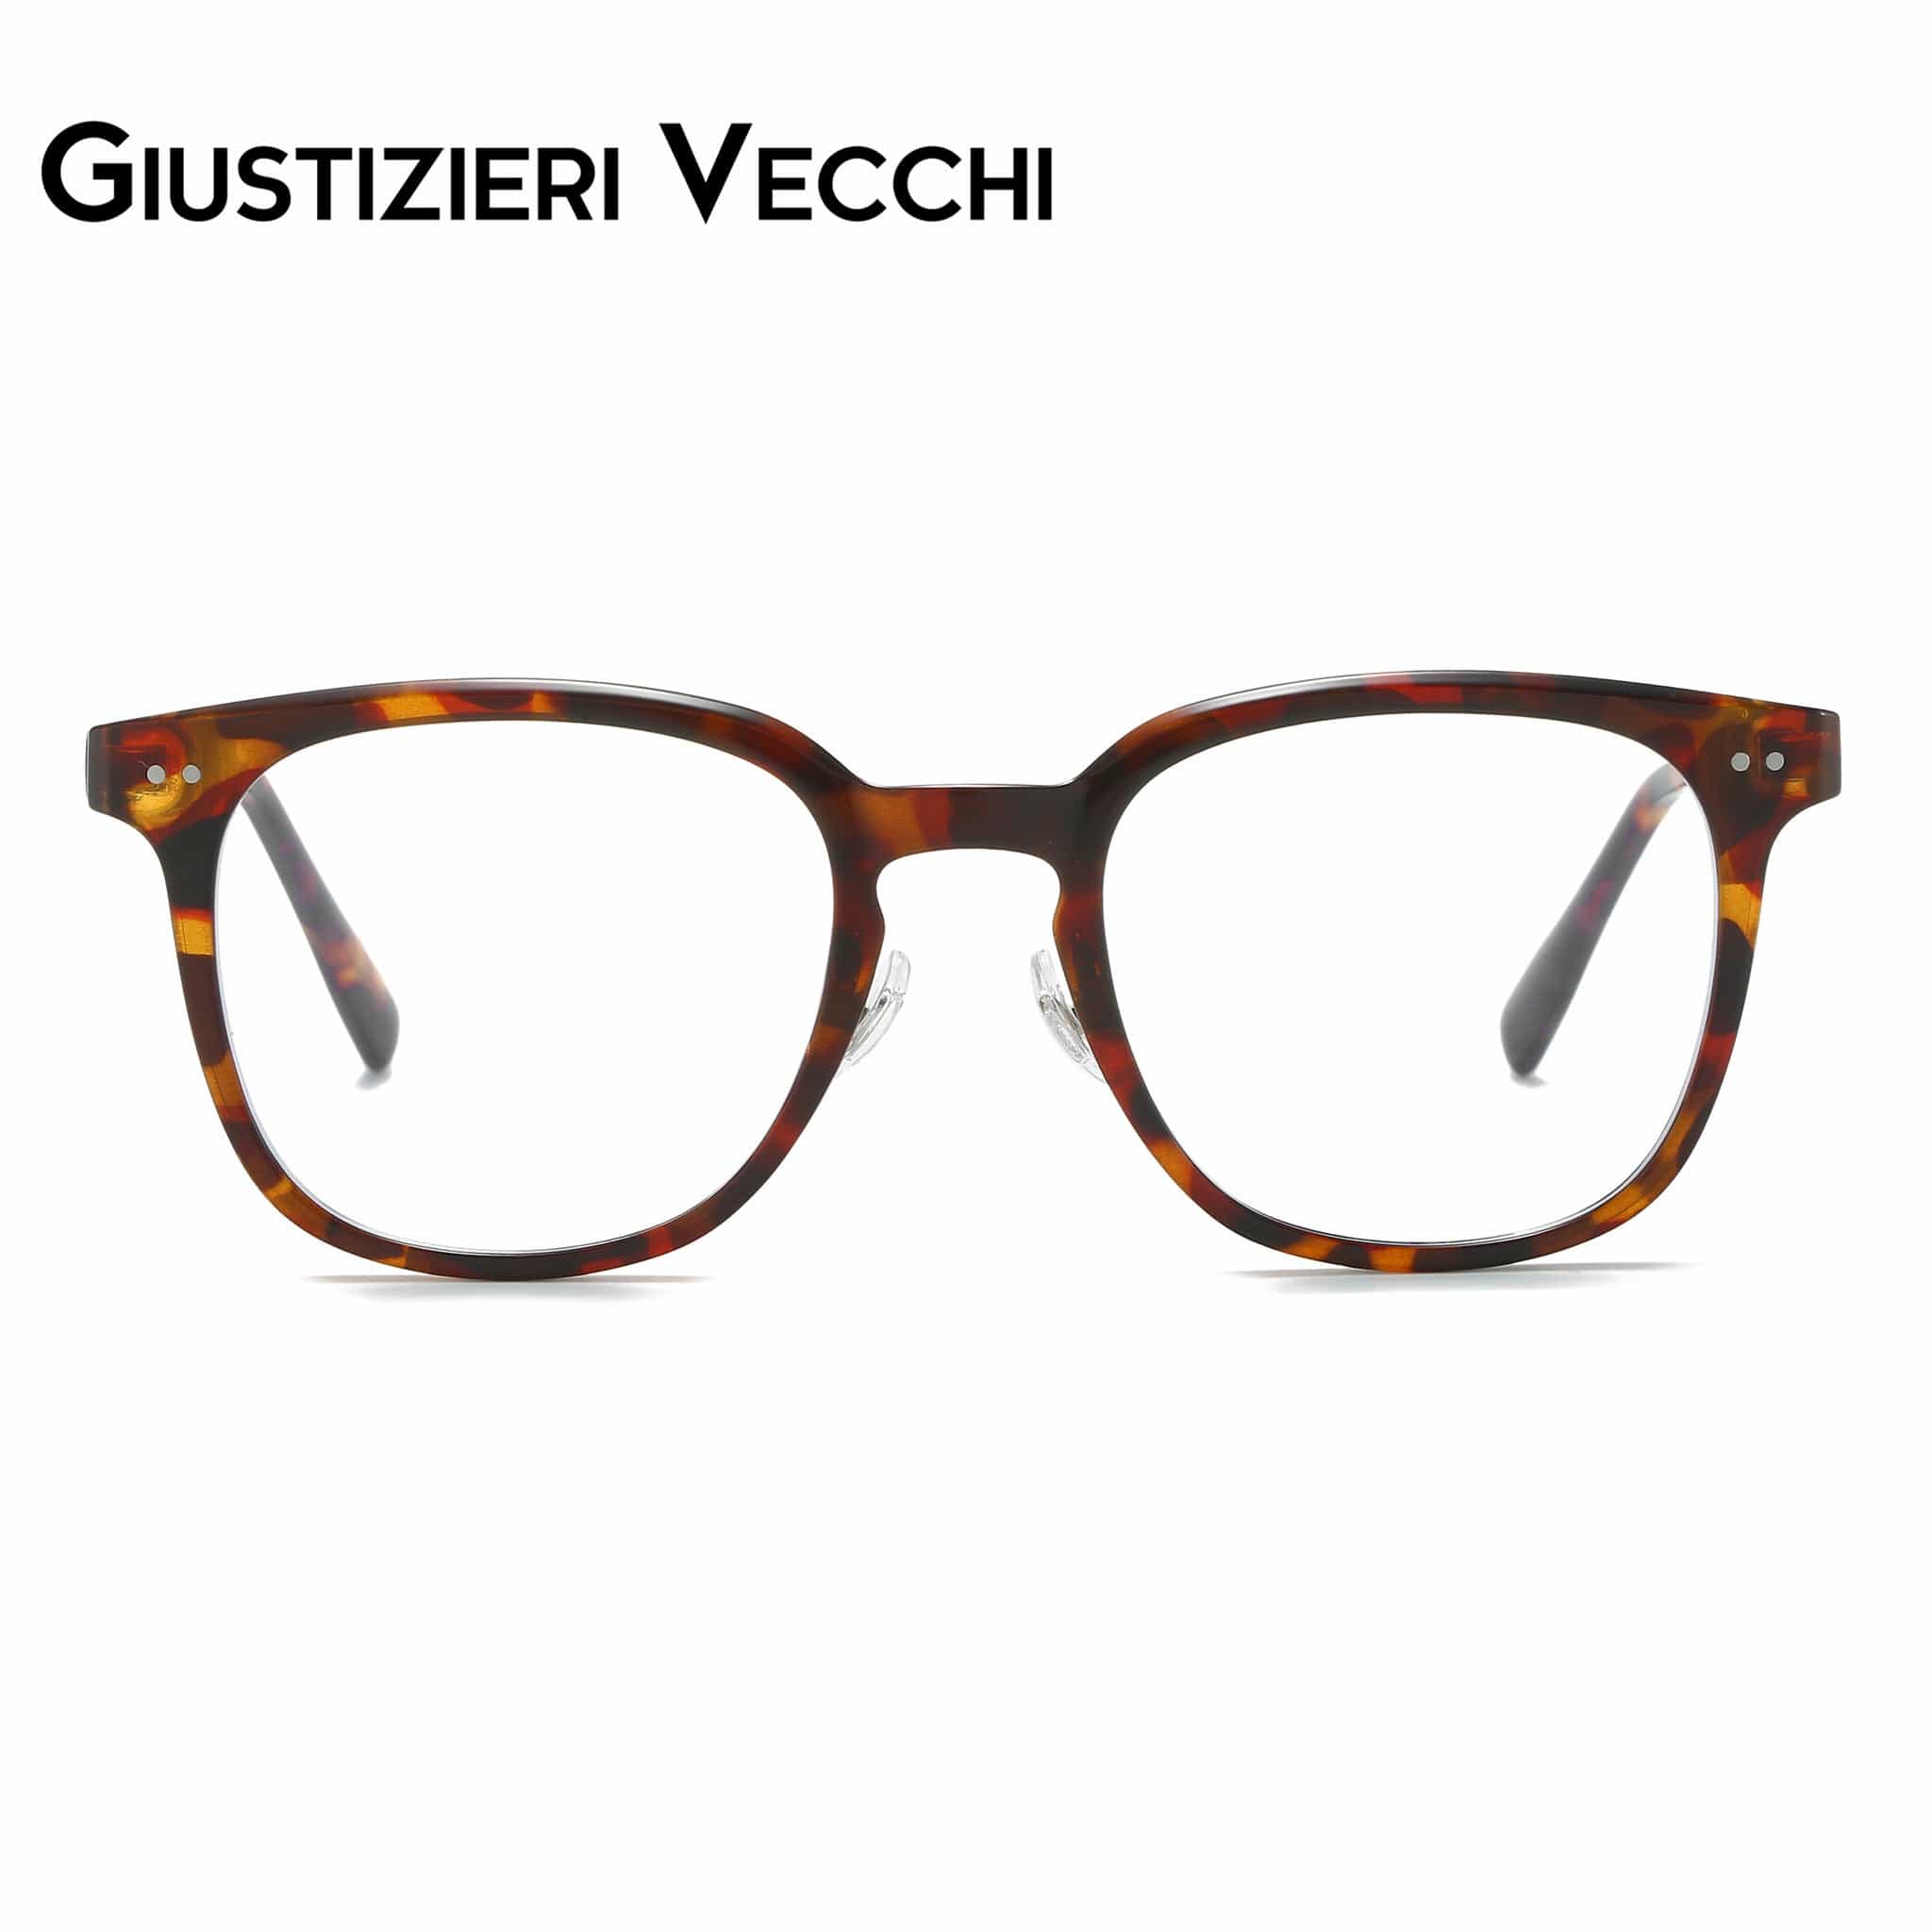 GIUSTIZIERI VECCHI Eyeglasses Medium / Merigold Tortoise RomaVista Uno